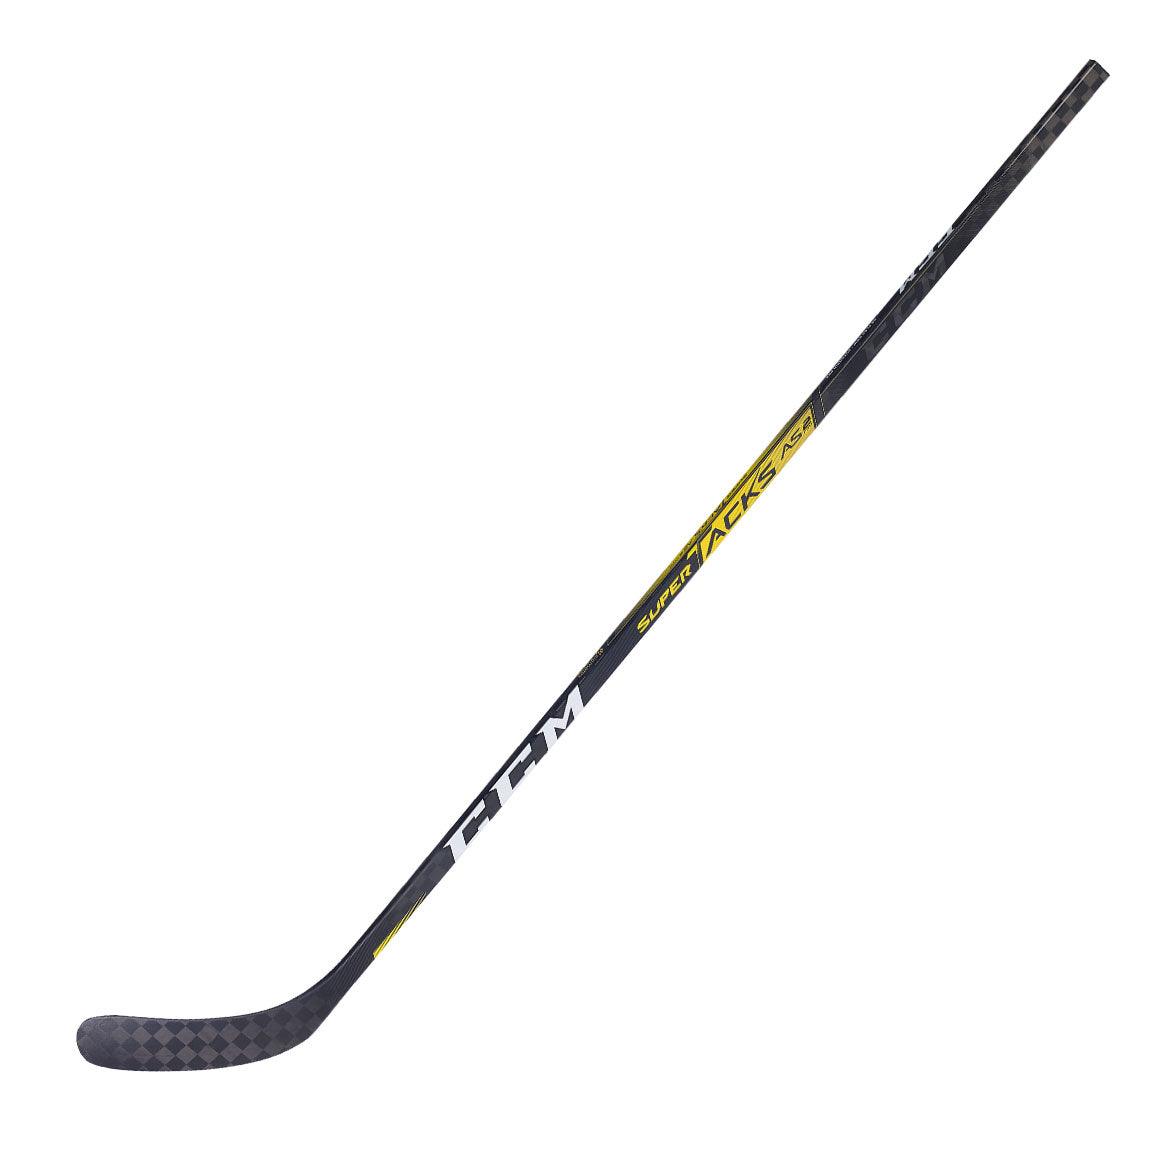 Super Tacks AS2 Pro Hockey Stick - Senior - Sports Excellence